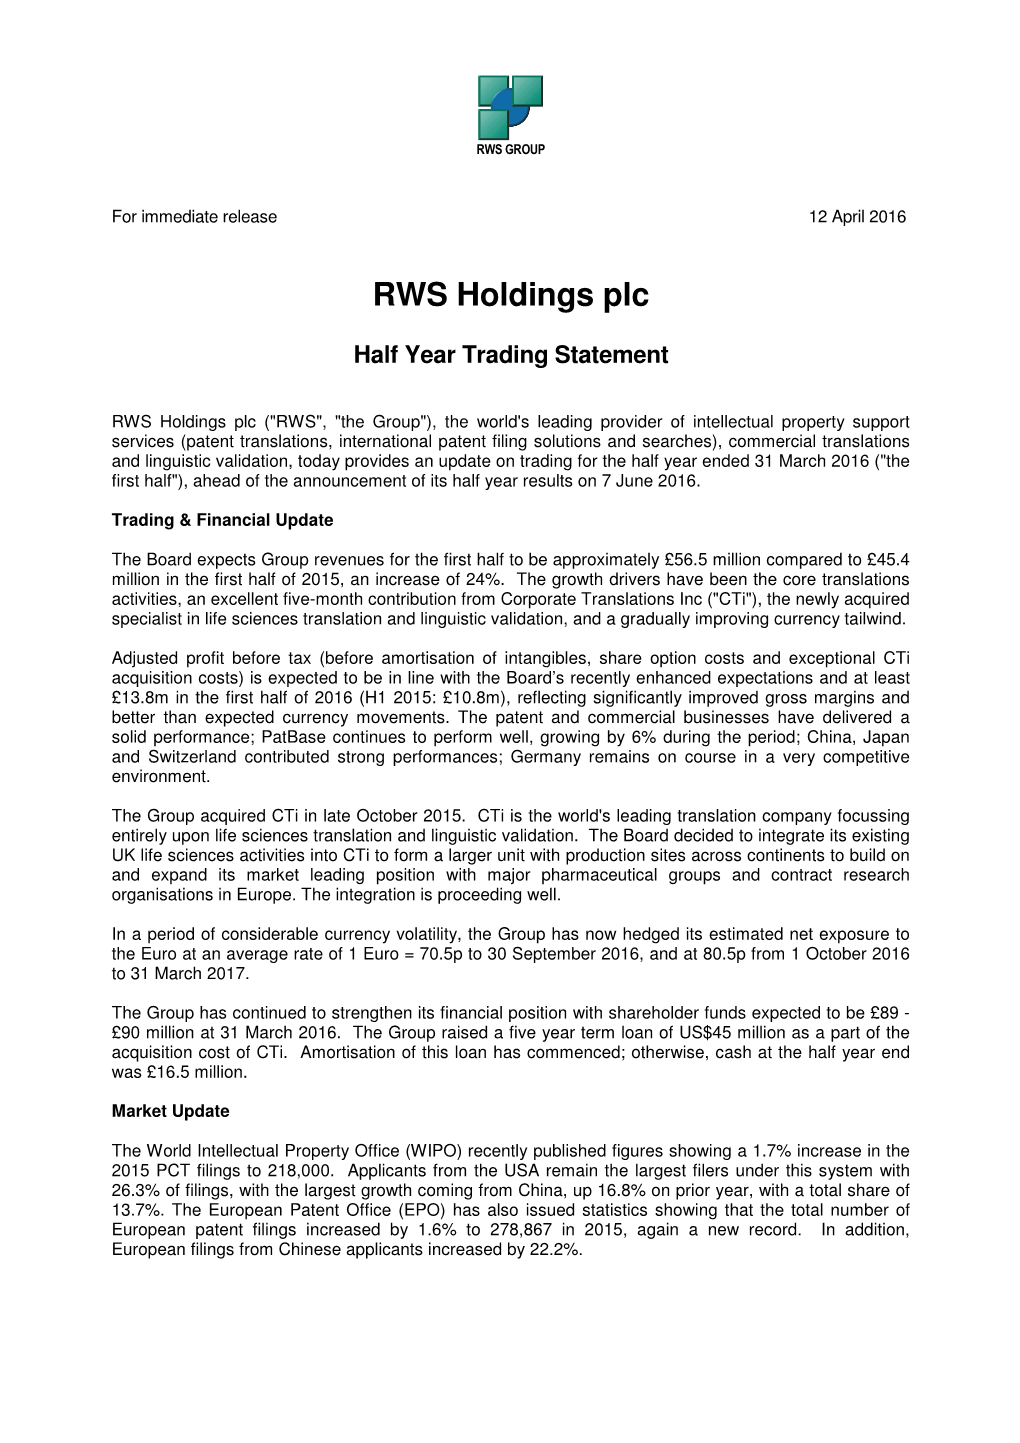 RWS Holdings Plc